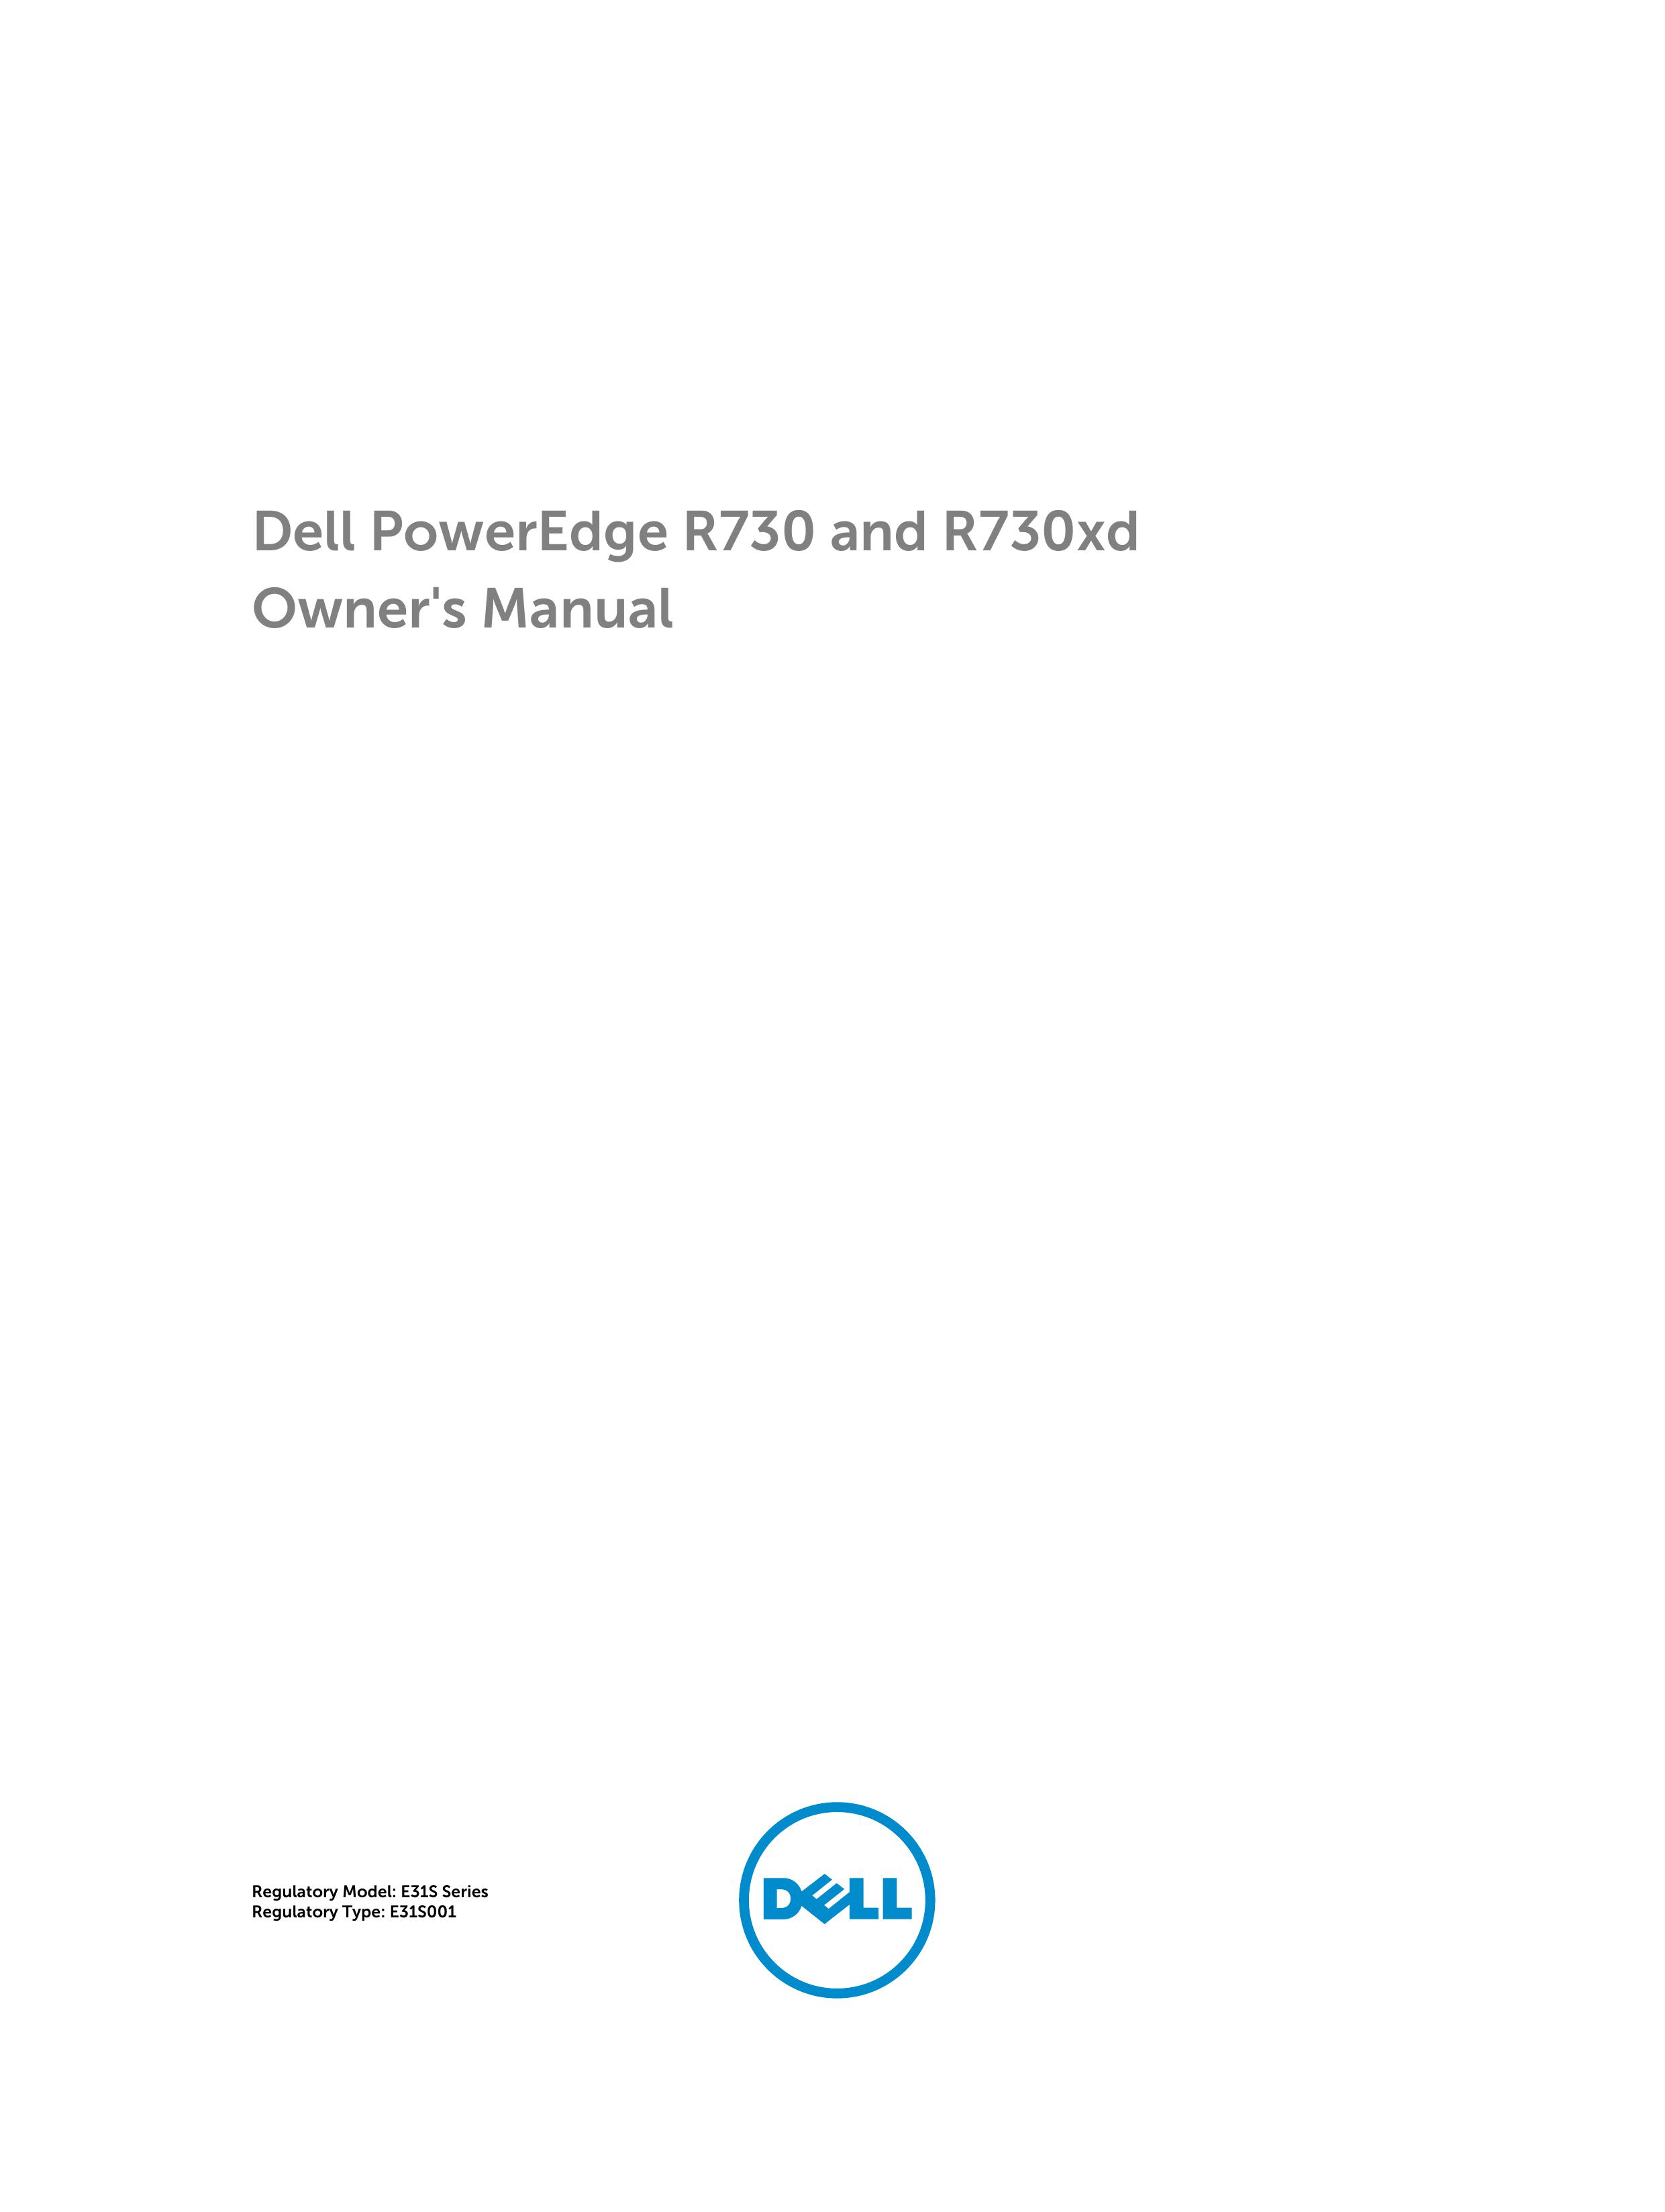 Dell R730 Life Jacket User Manual